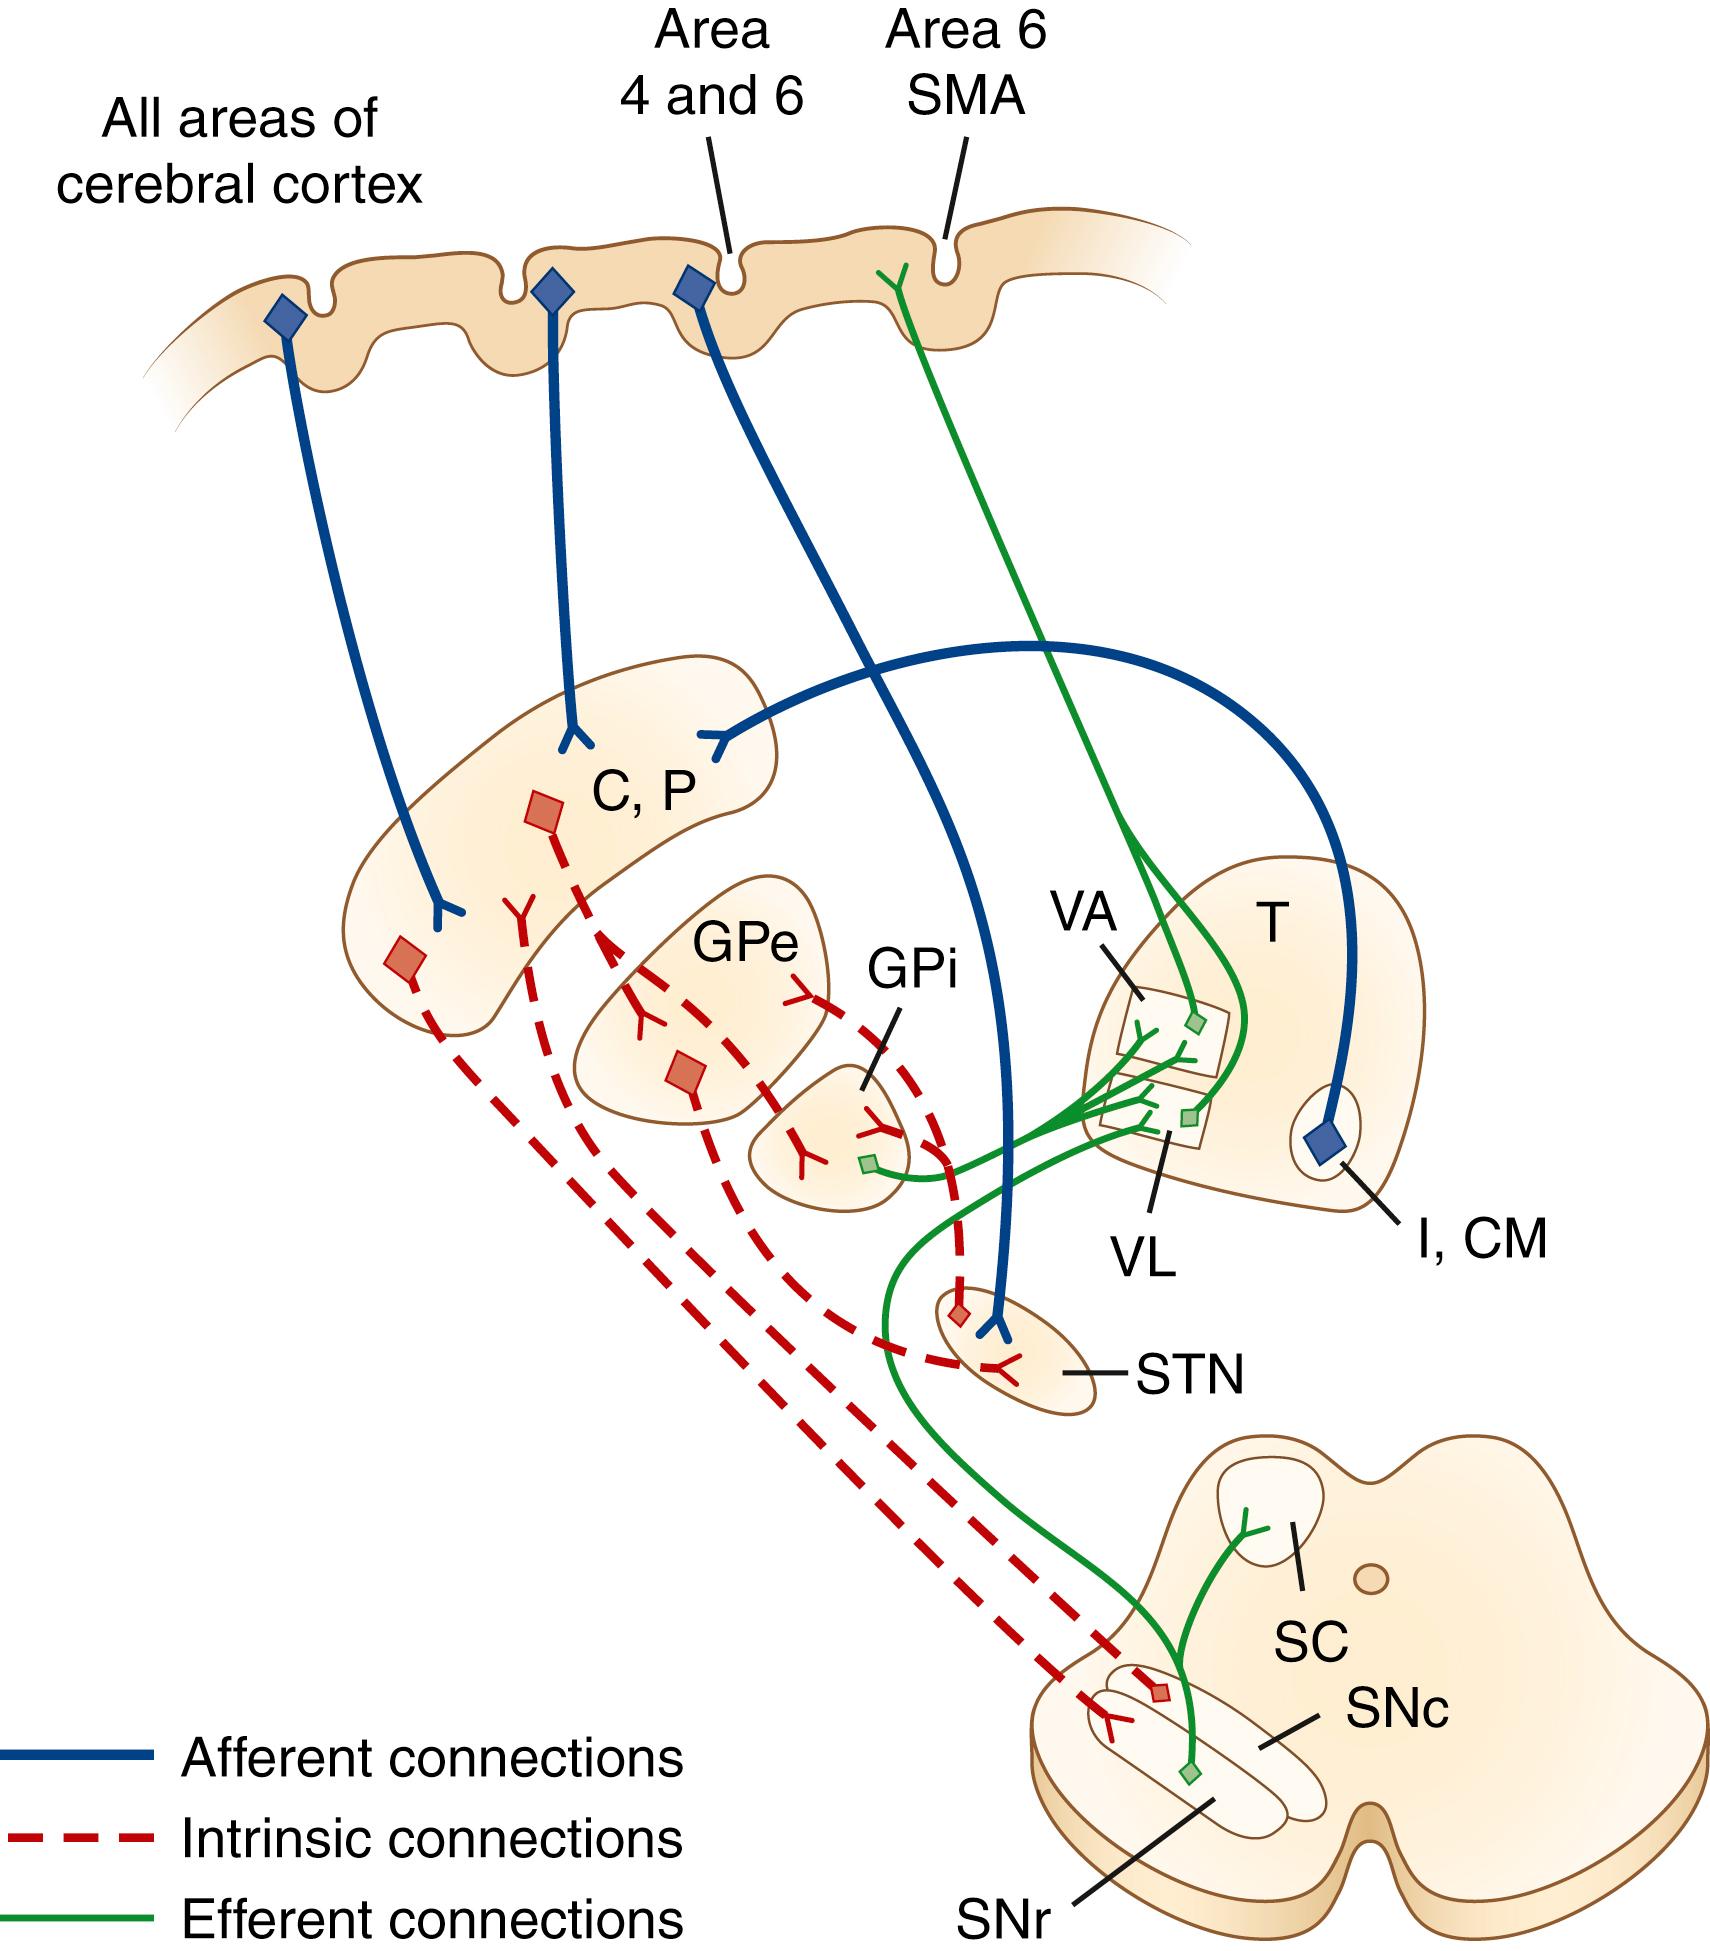 Fig. 96.1, Schematic drawing of interconnections between the basal ganglia and its afferent and efferent connections. CM , Centromedian nucleus of thalamus; C,P , caudate, putamen (striatum); GPe , lateral (external) globus pallidus; GPi , medial (internal) globus pallidus; SC , superior colliculus; SMA , supplementary motor area; STN , subthalamic nucleus; SNc , substantia nigra pars compacta; SNr , substantia nigra pars reticulata; T , thalamus; VA , ventral anterior; VL , ventrolateral.